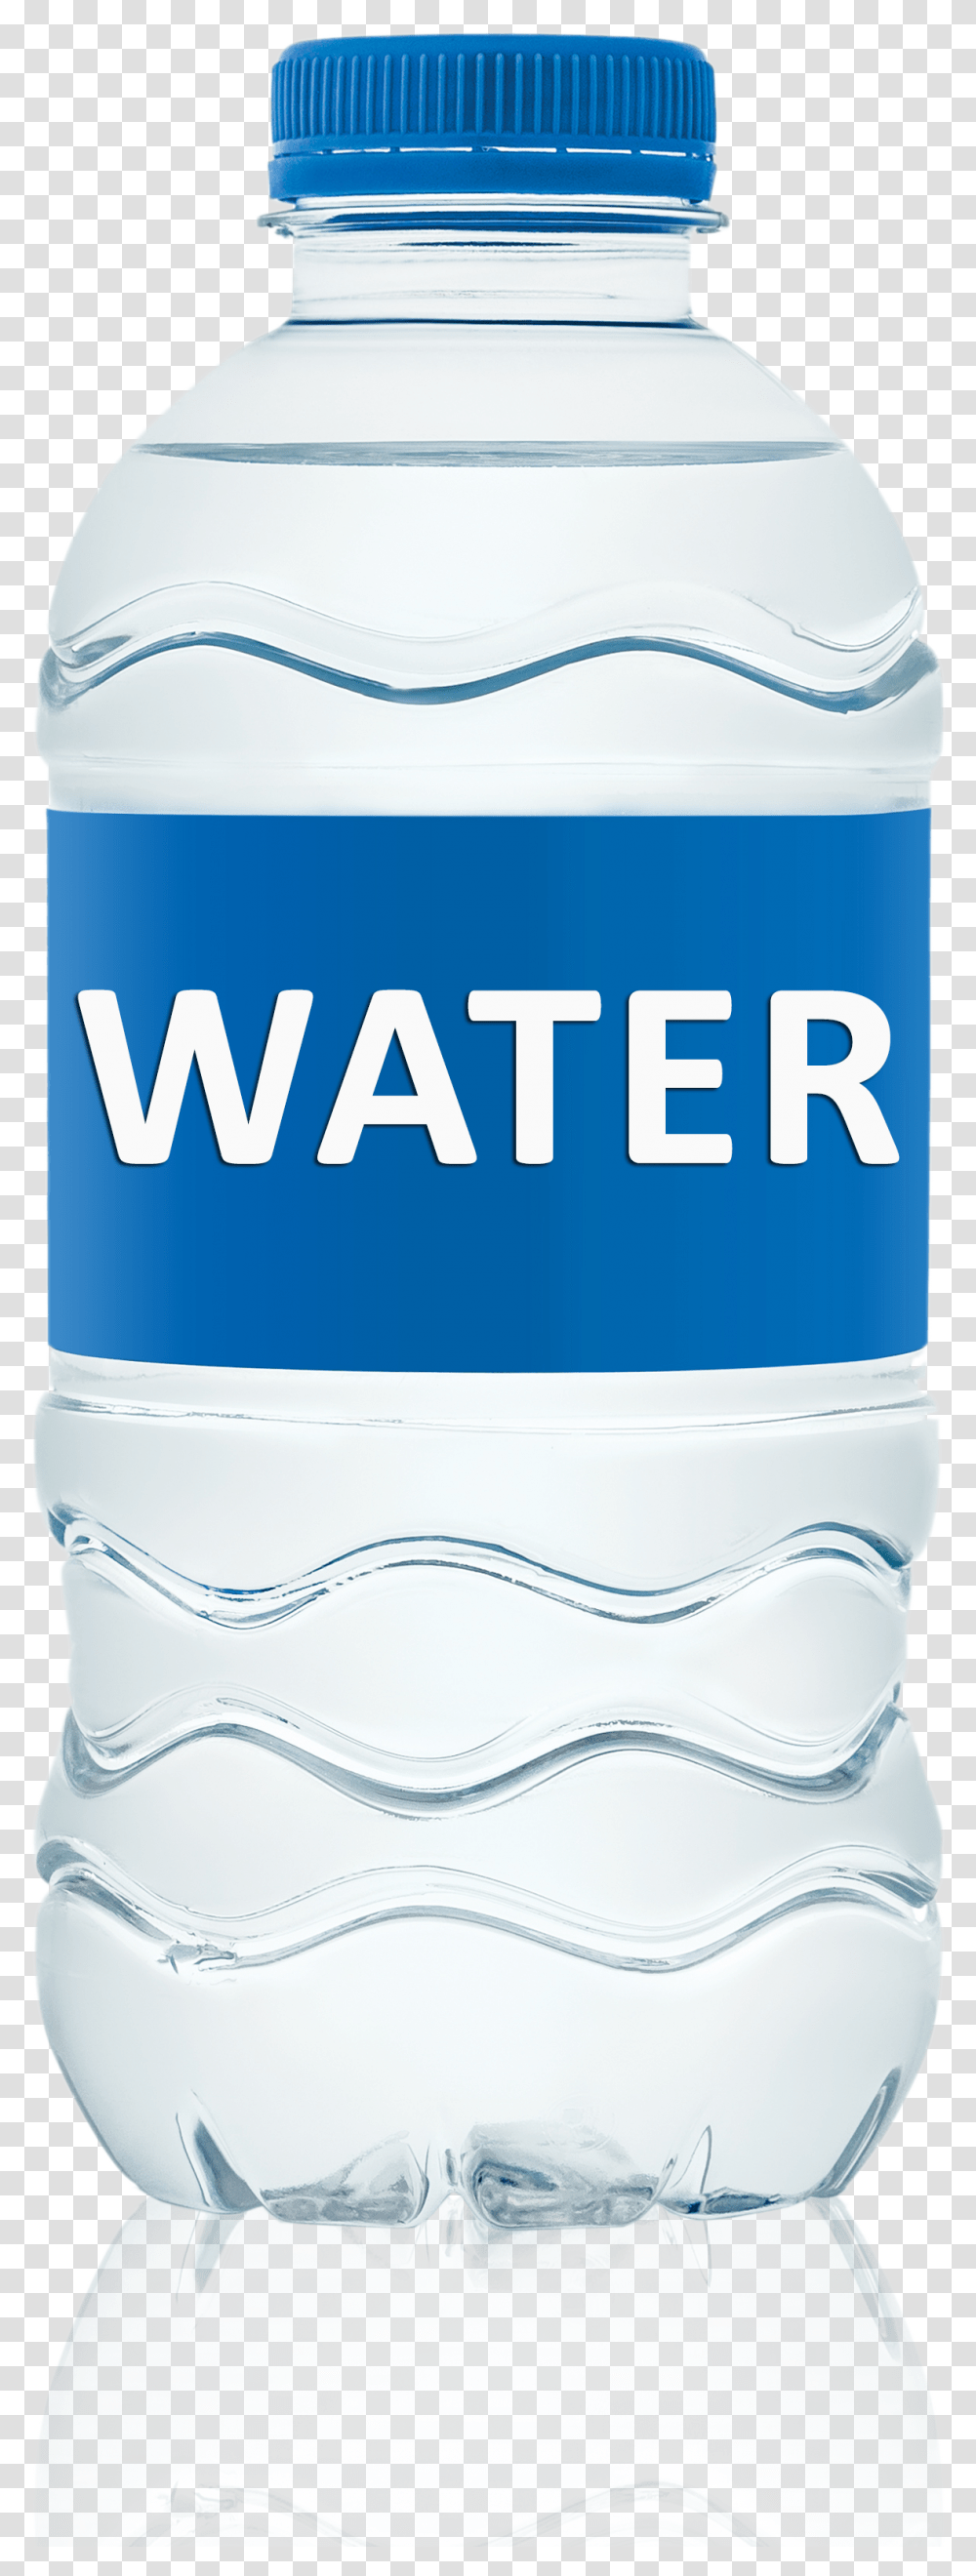 Water Bottle Water Bottle Background, Mineral Water, Beverage, Drink, Diaper Transparent Png